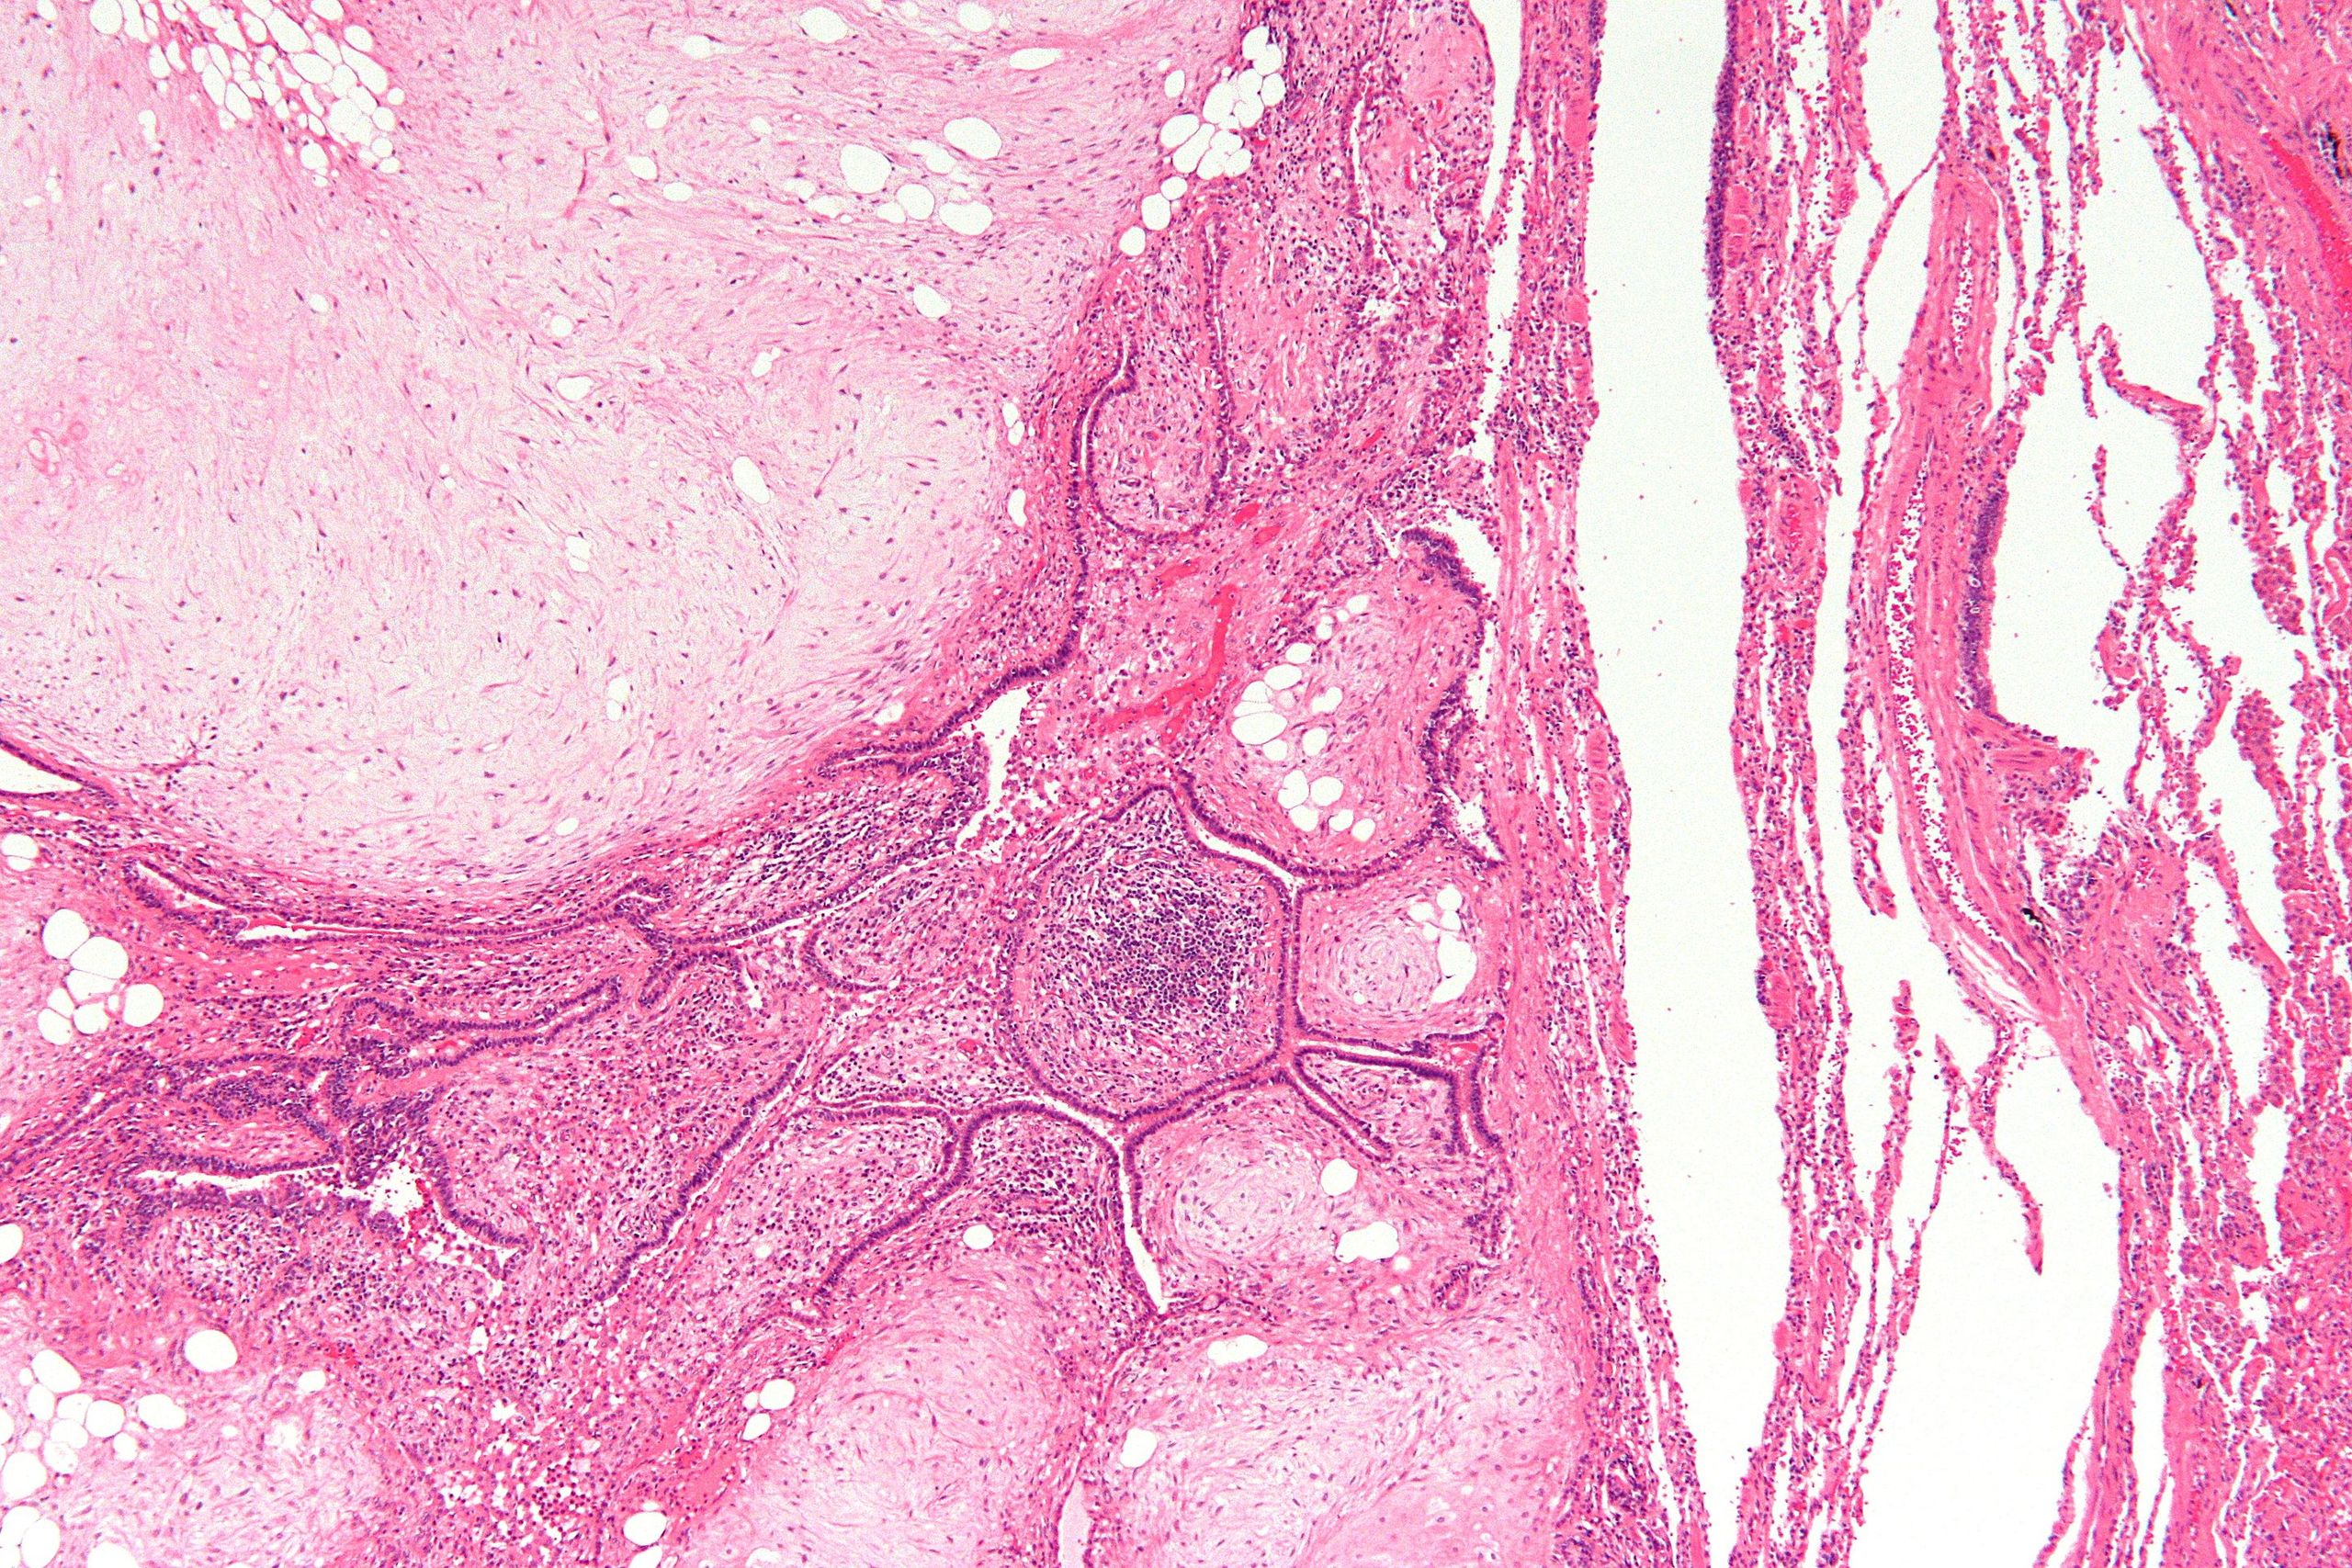 Low magnification micrograph of a pulmonary hamartoma. H&E stain.[11]